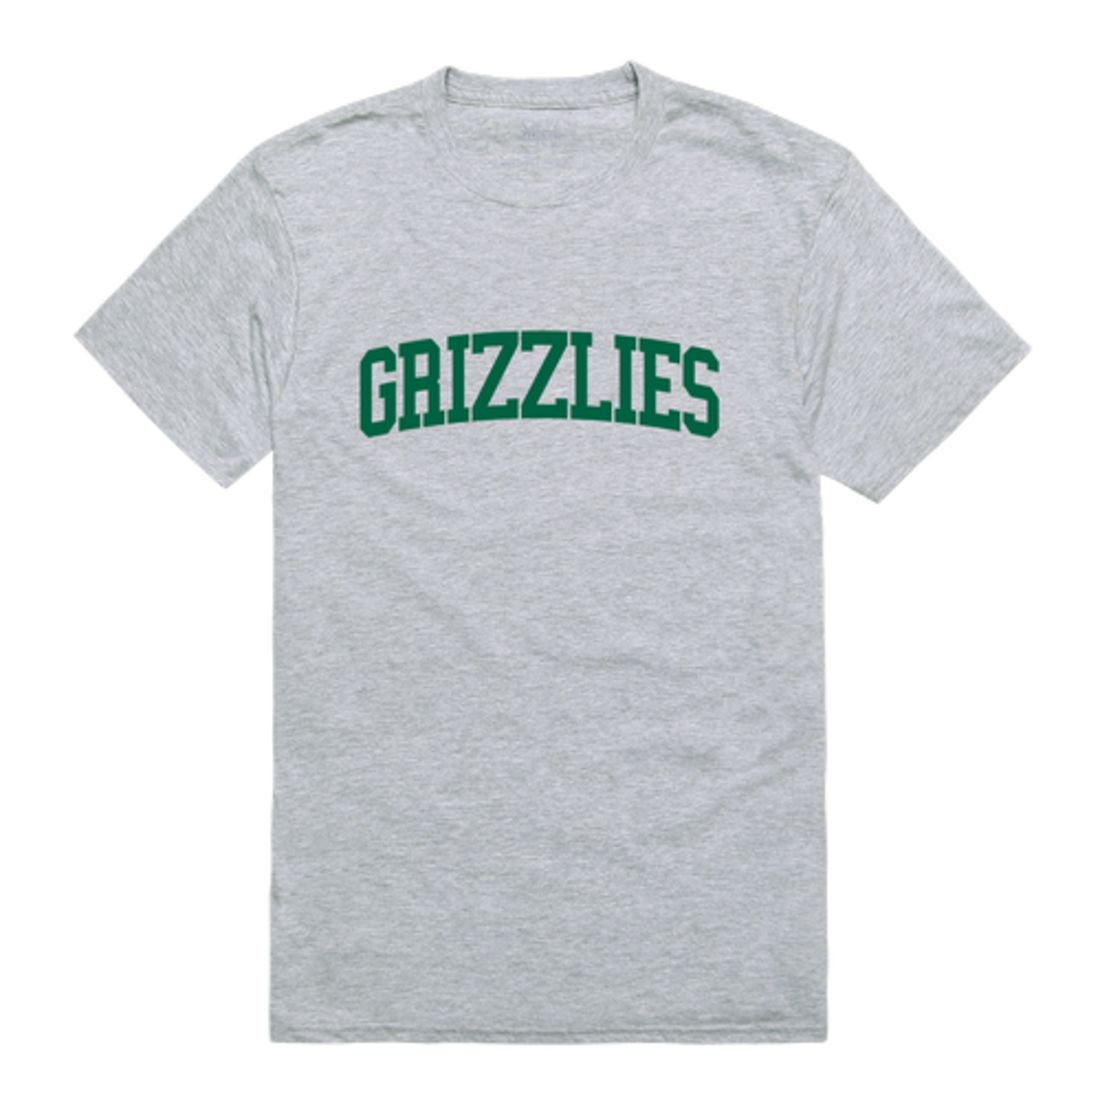 Georgia Gwinnett College Grizzlies Game Day T-Shirt Tee